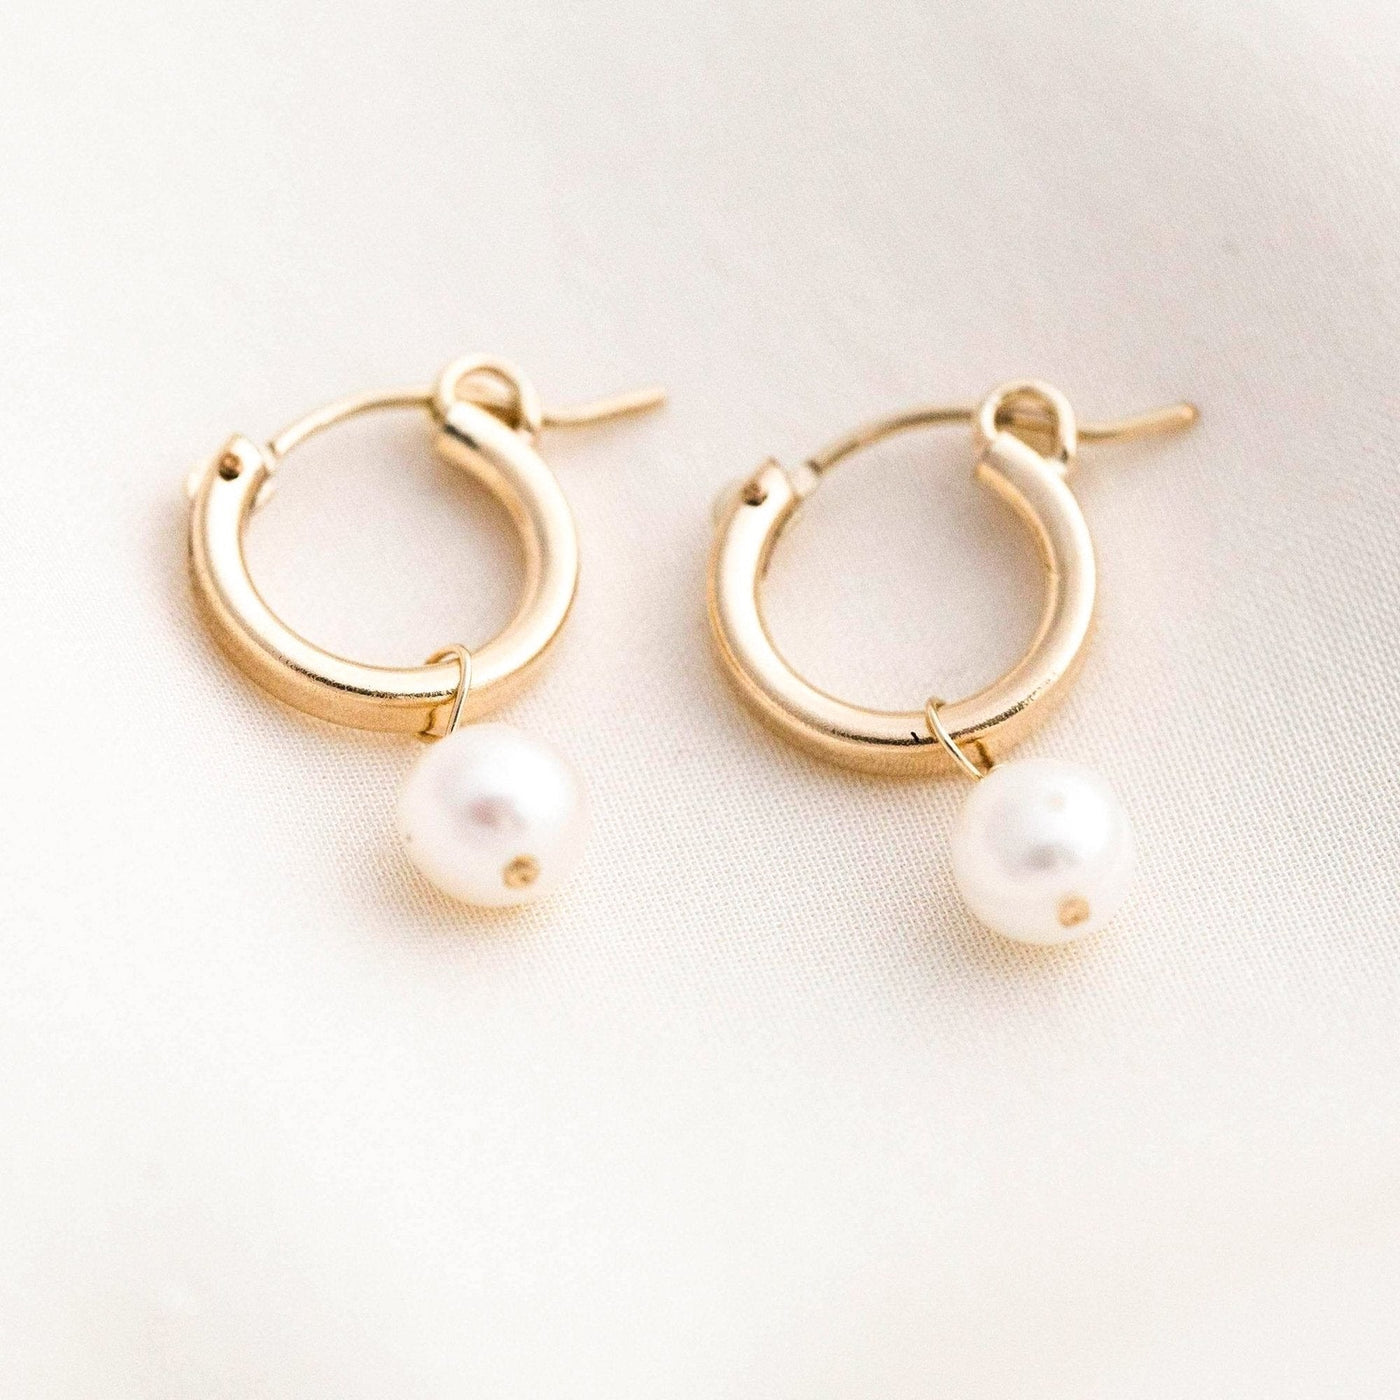 Pearl Hoop Earrings by Simple & Dainty Jewelry